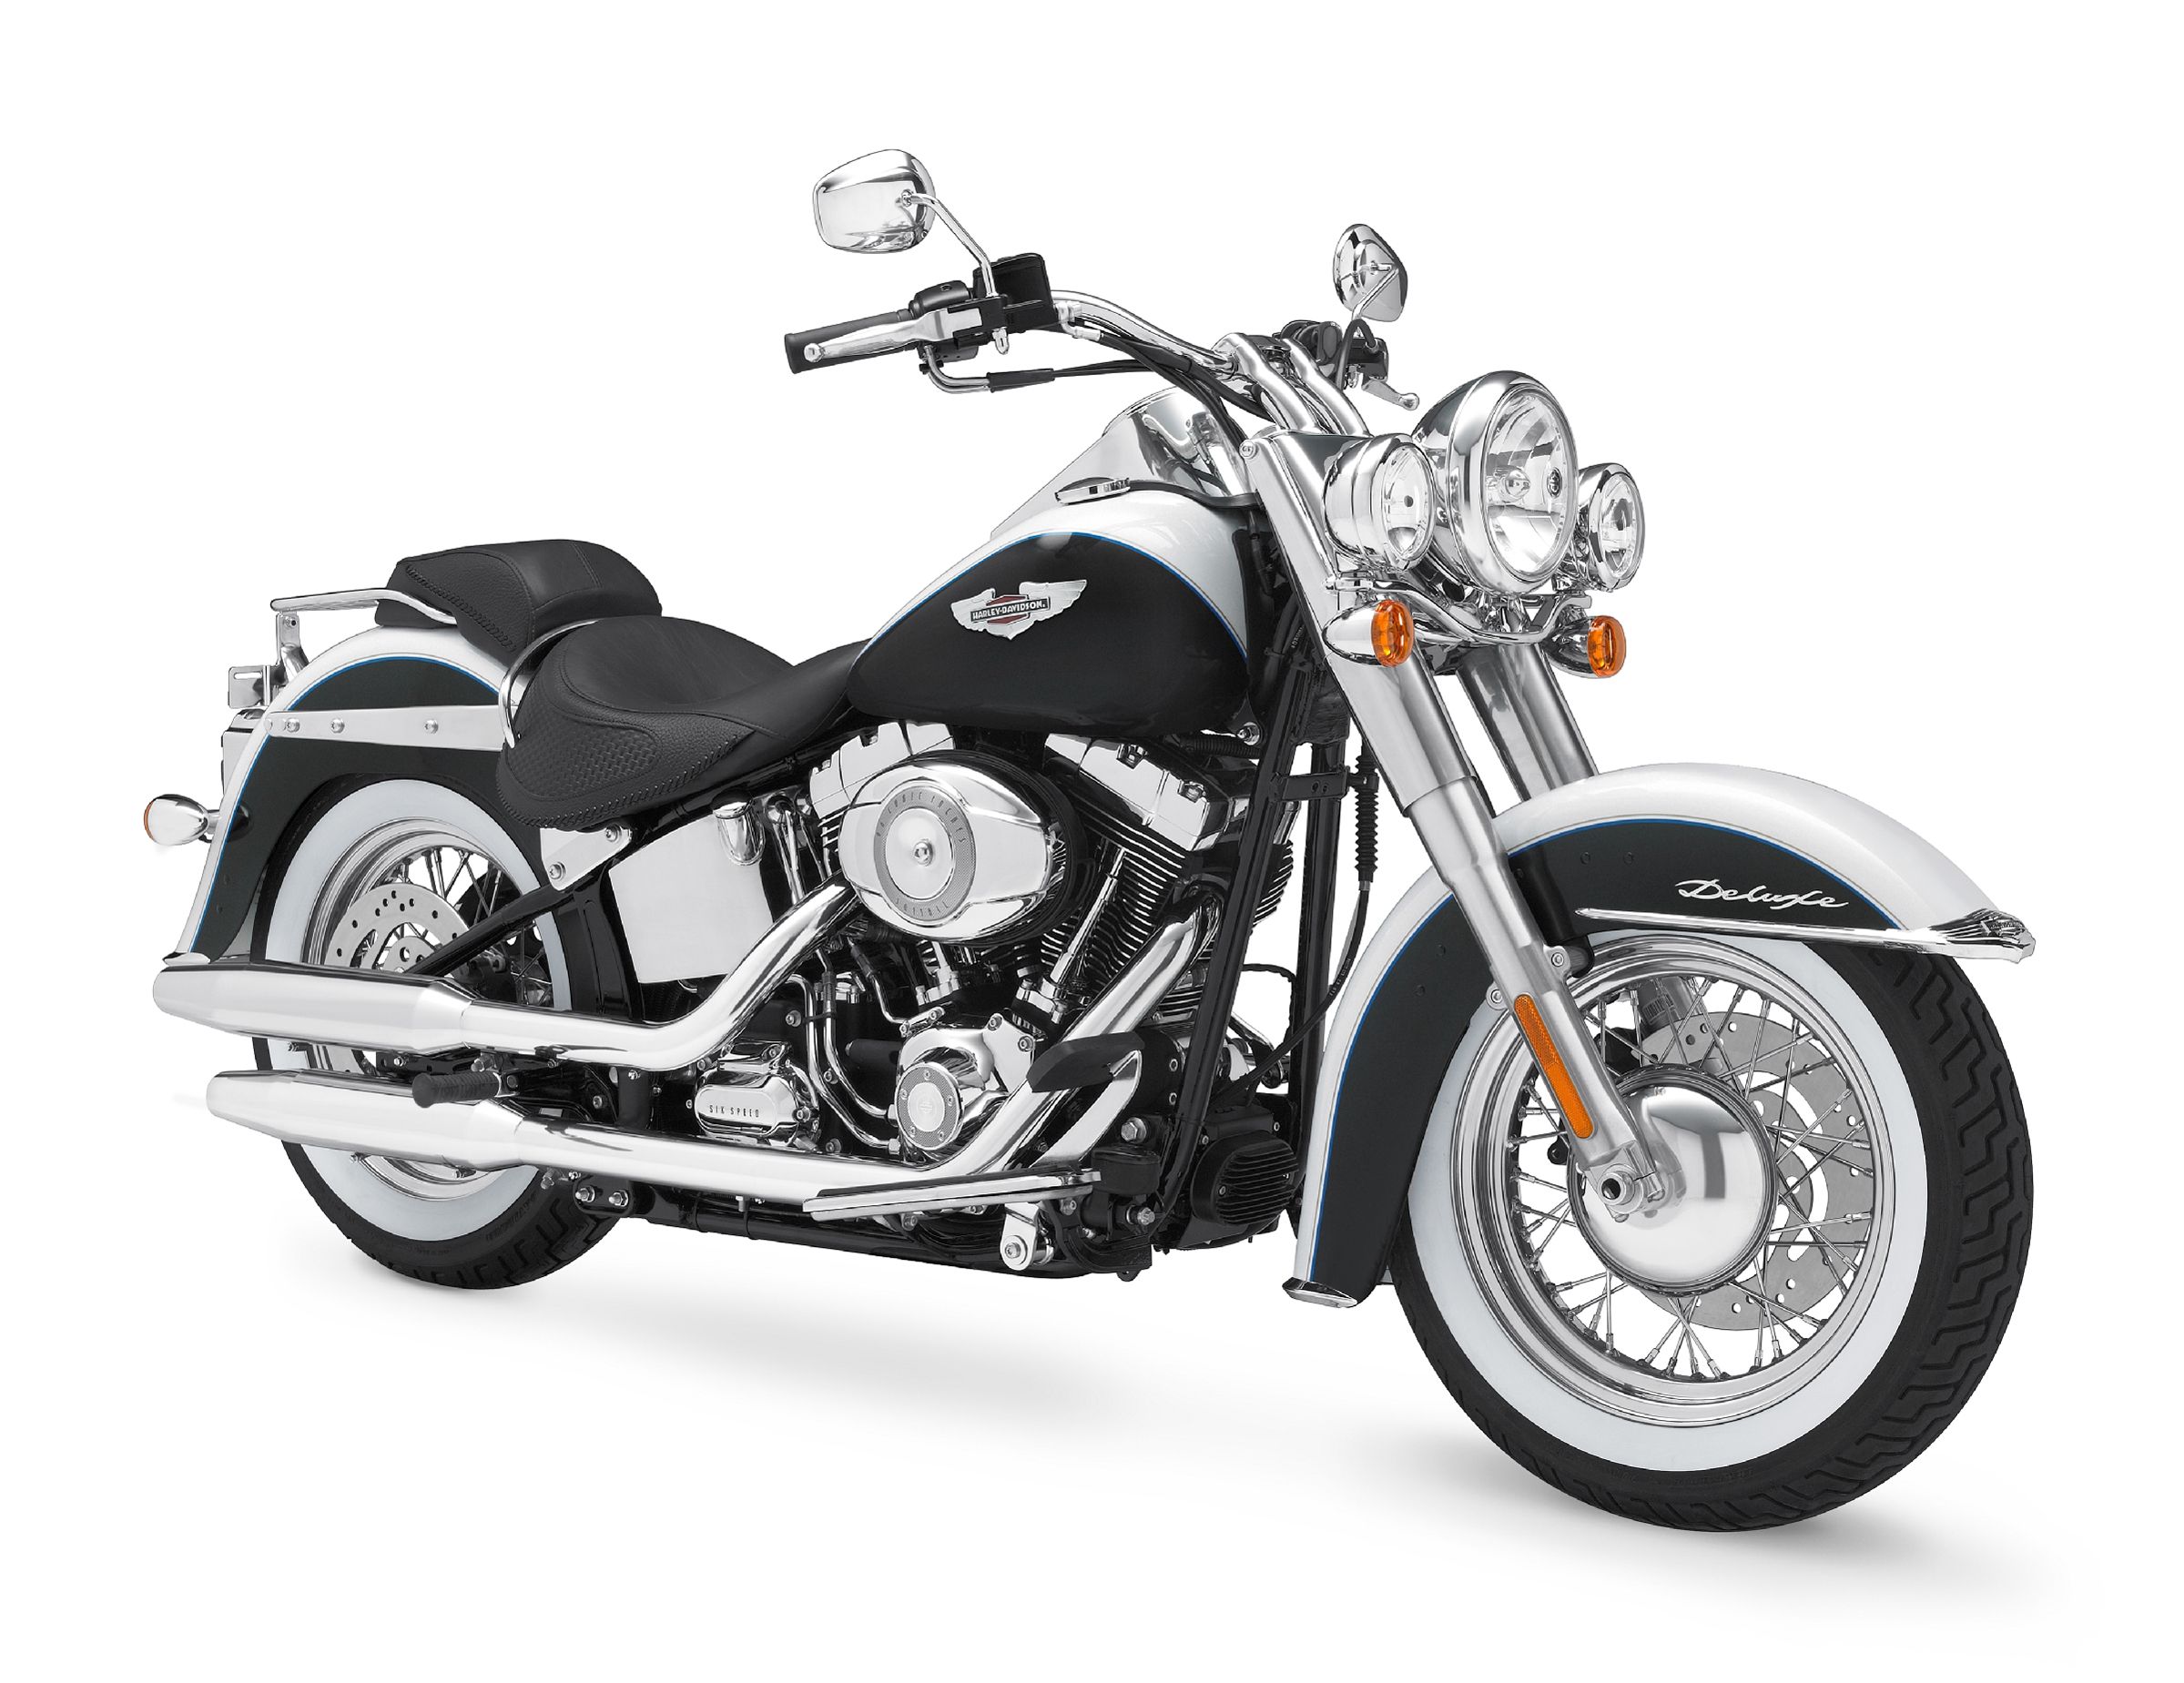  2009 Harley-Davidson Softail Deluxe